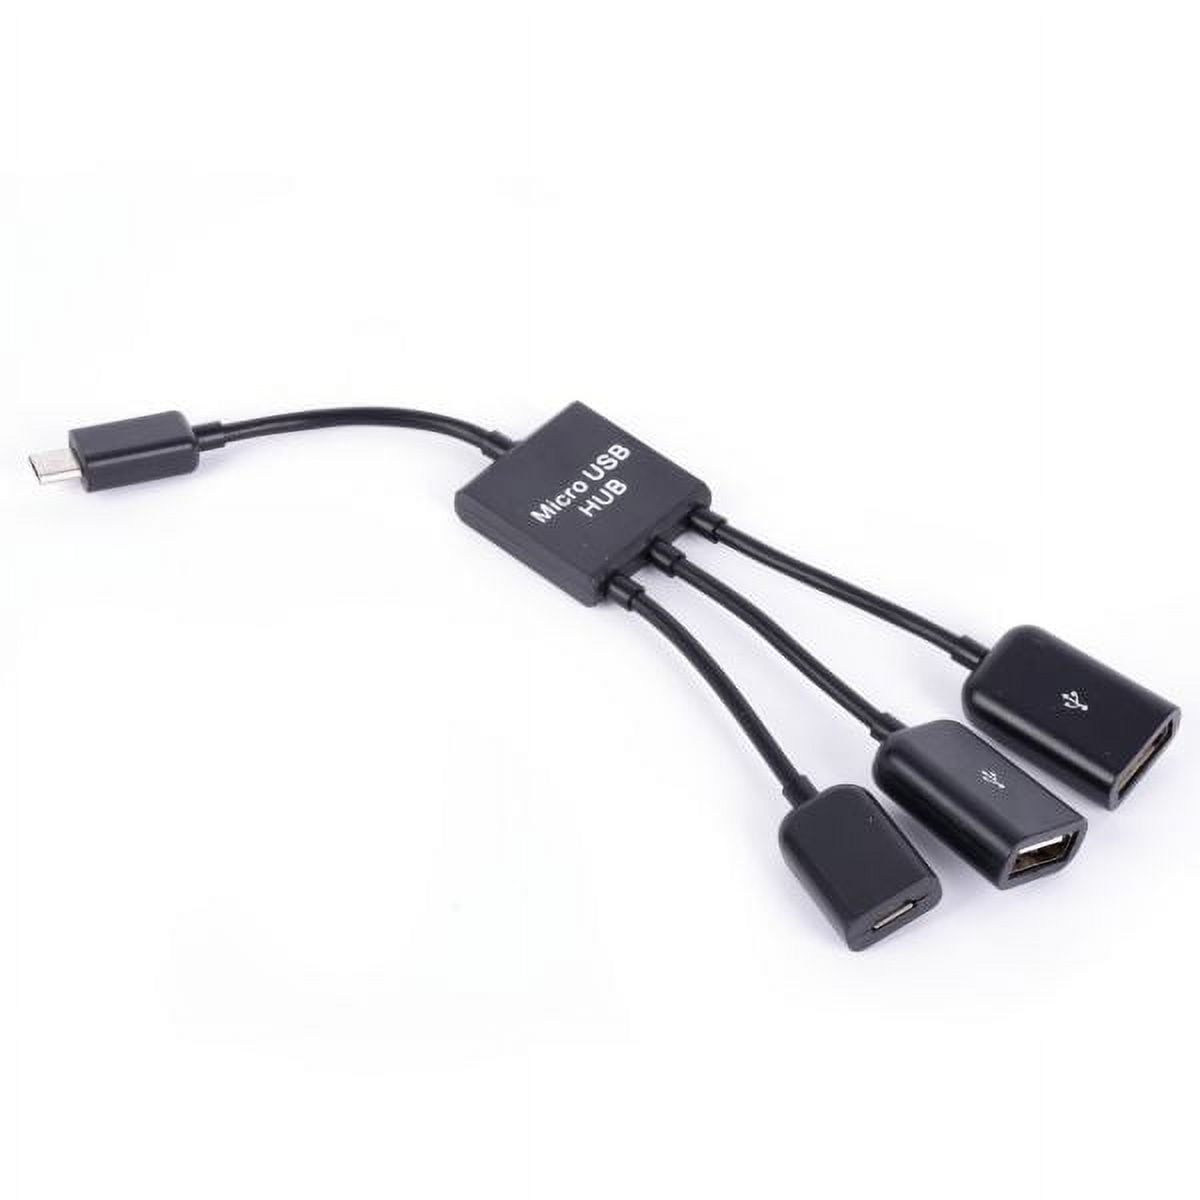 Adaptateur micro-USB vers USB, OTG Maroc - Moussasoft